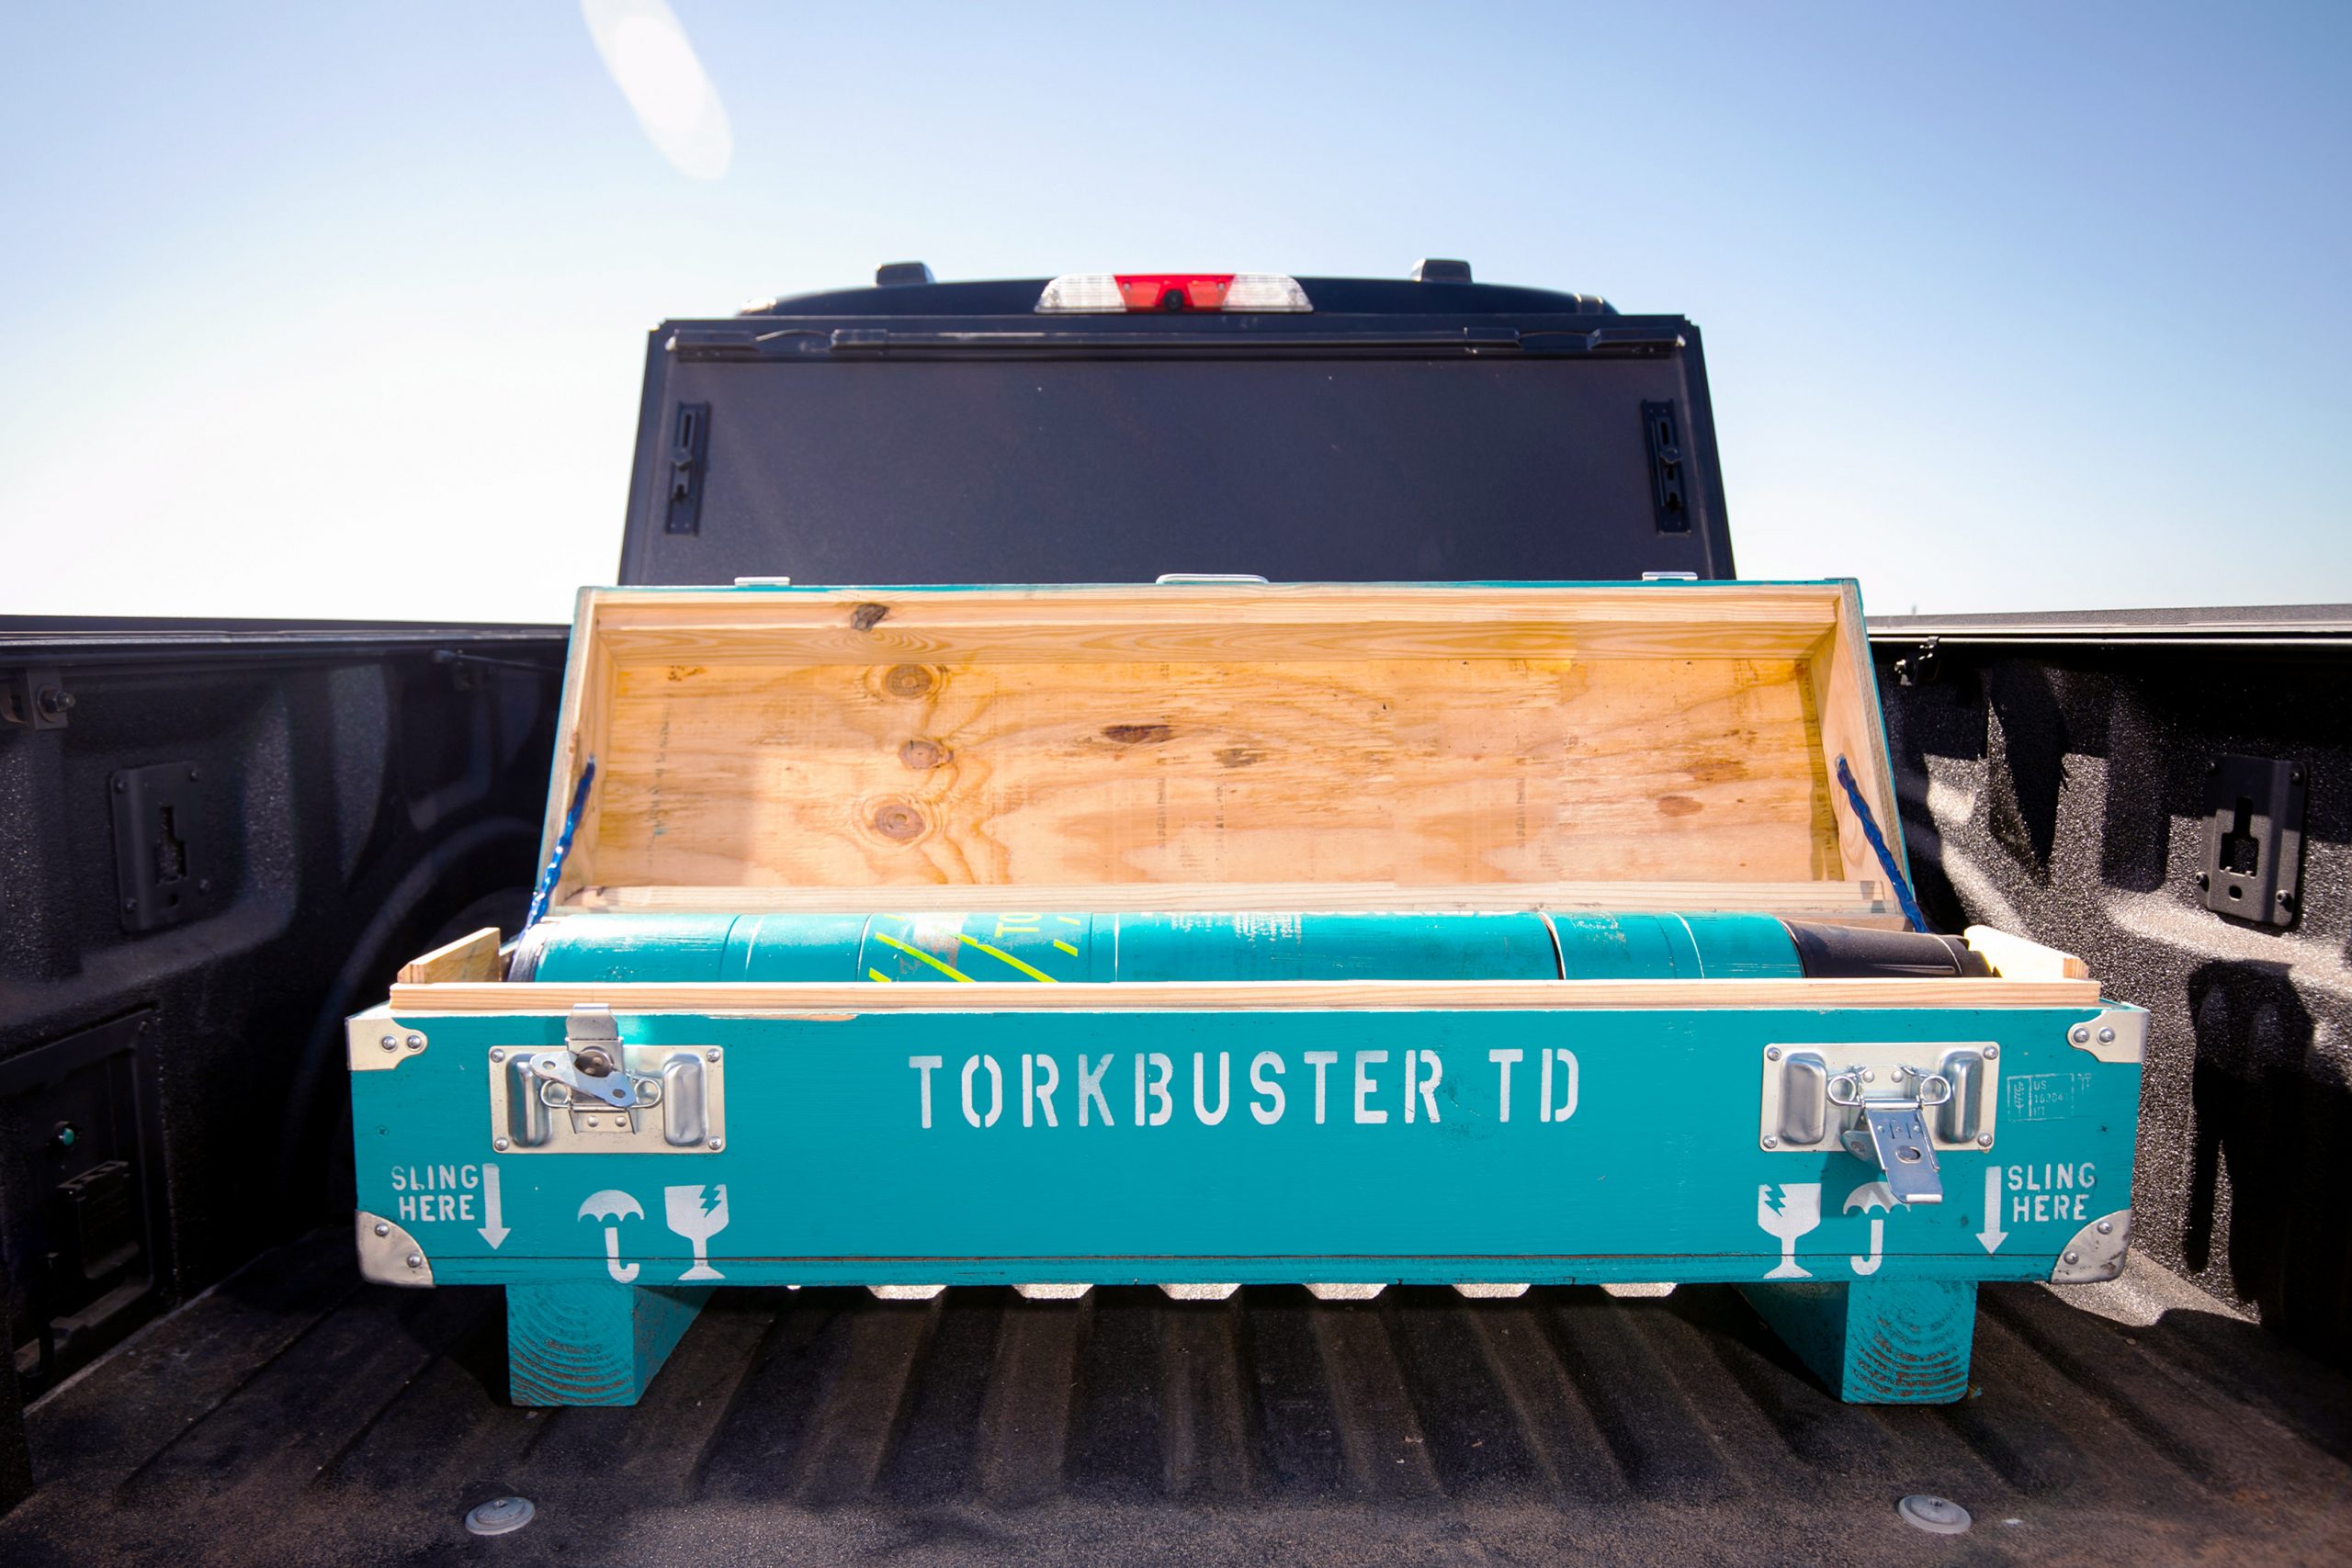 UUlterra TorkBusterTD Tool in crate in truck bed